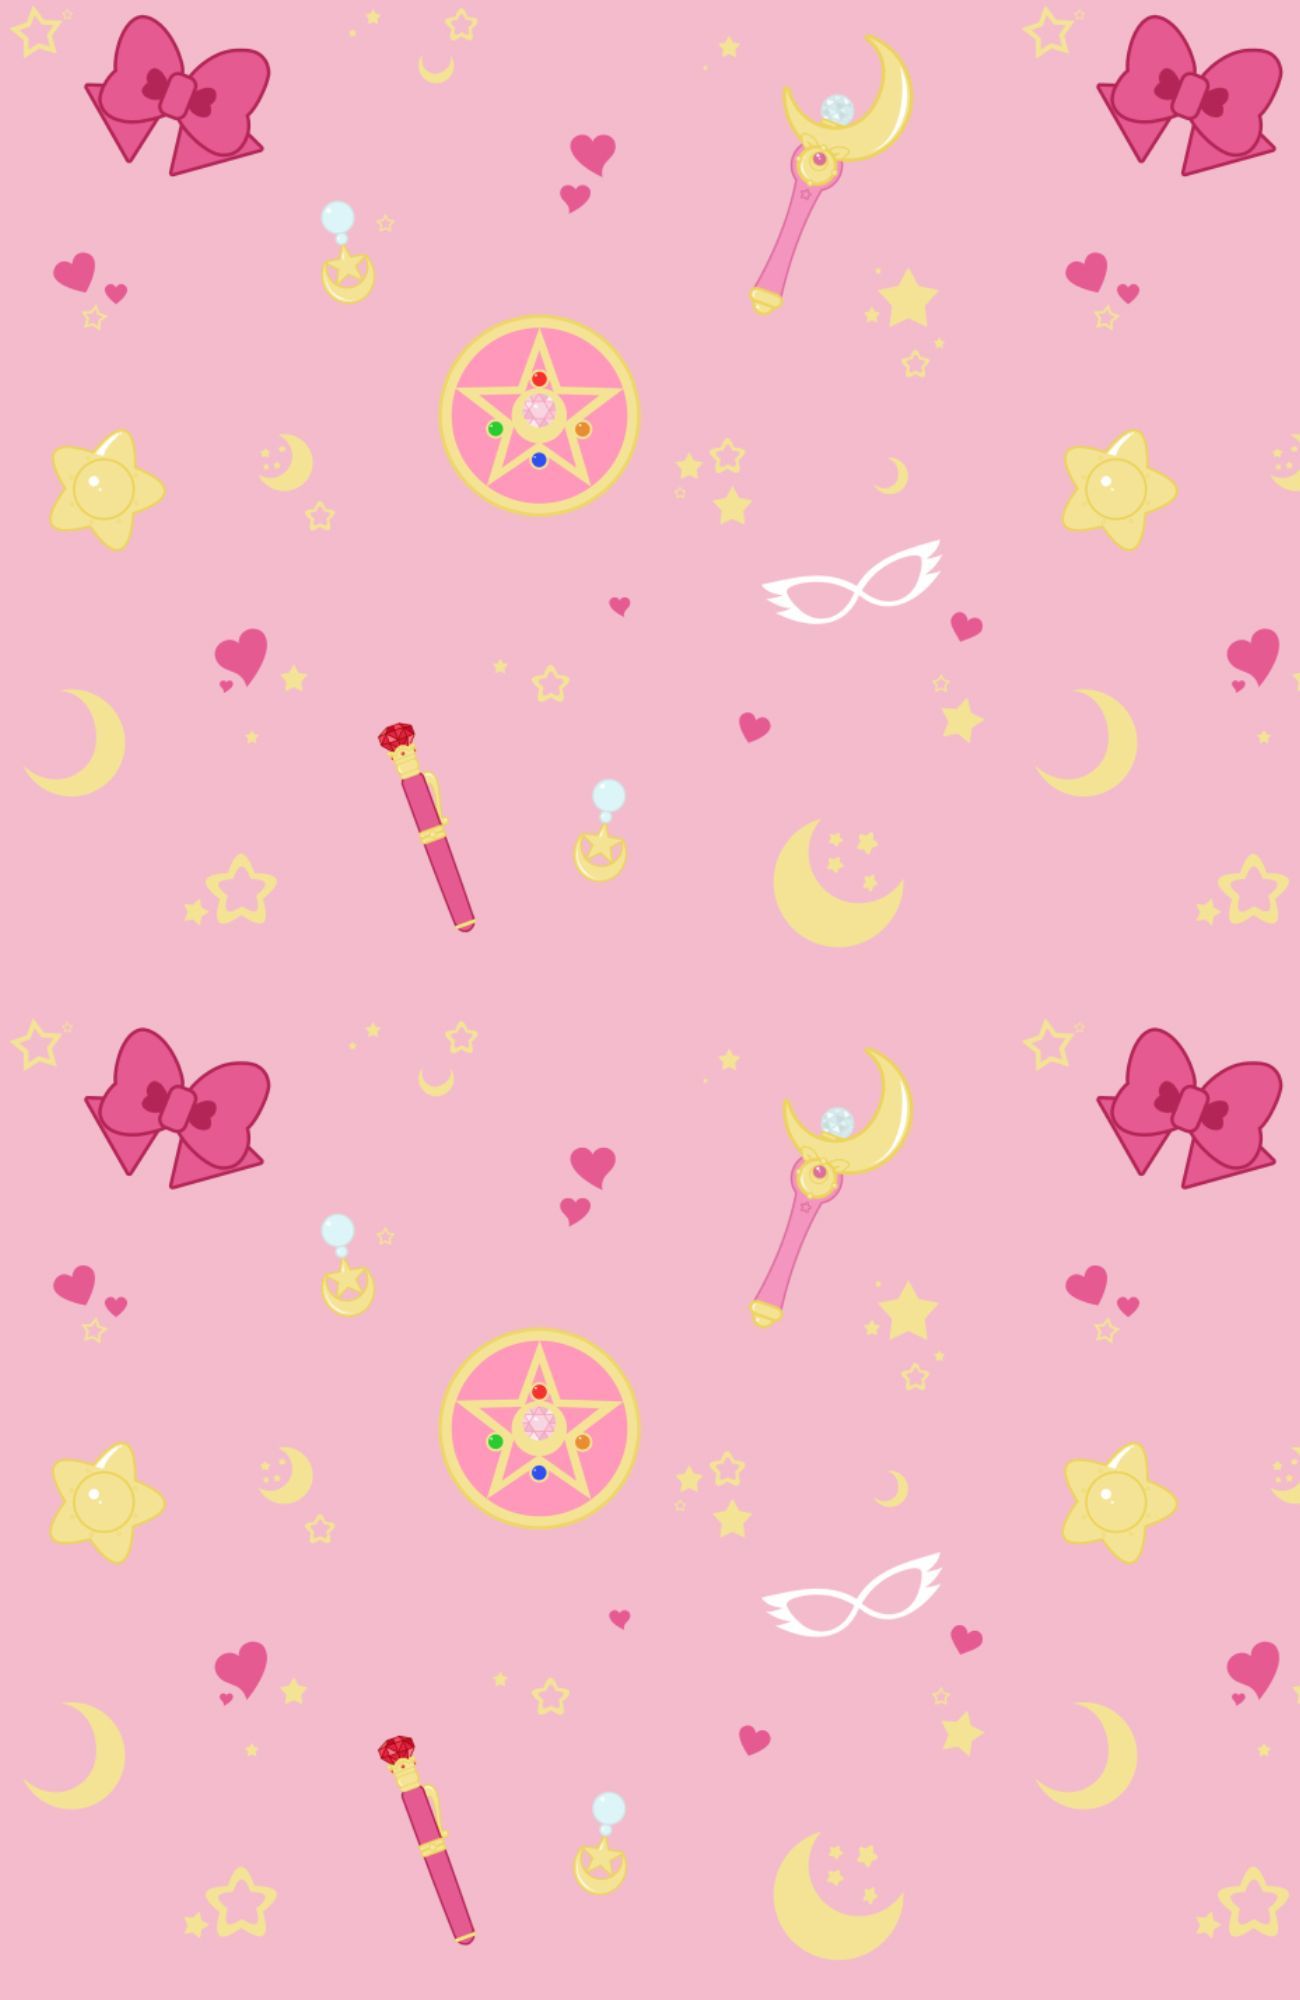 Sailor Moon Child. Sailor moon wallpaper, Sailor moon party, Sailor moon background